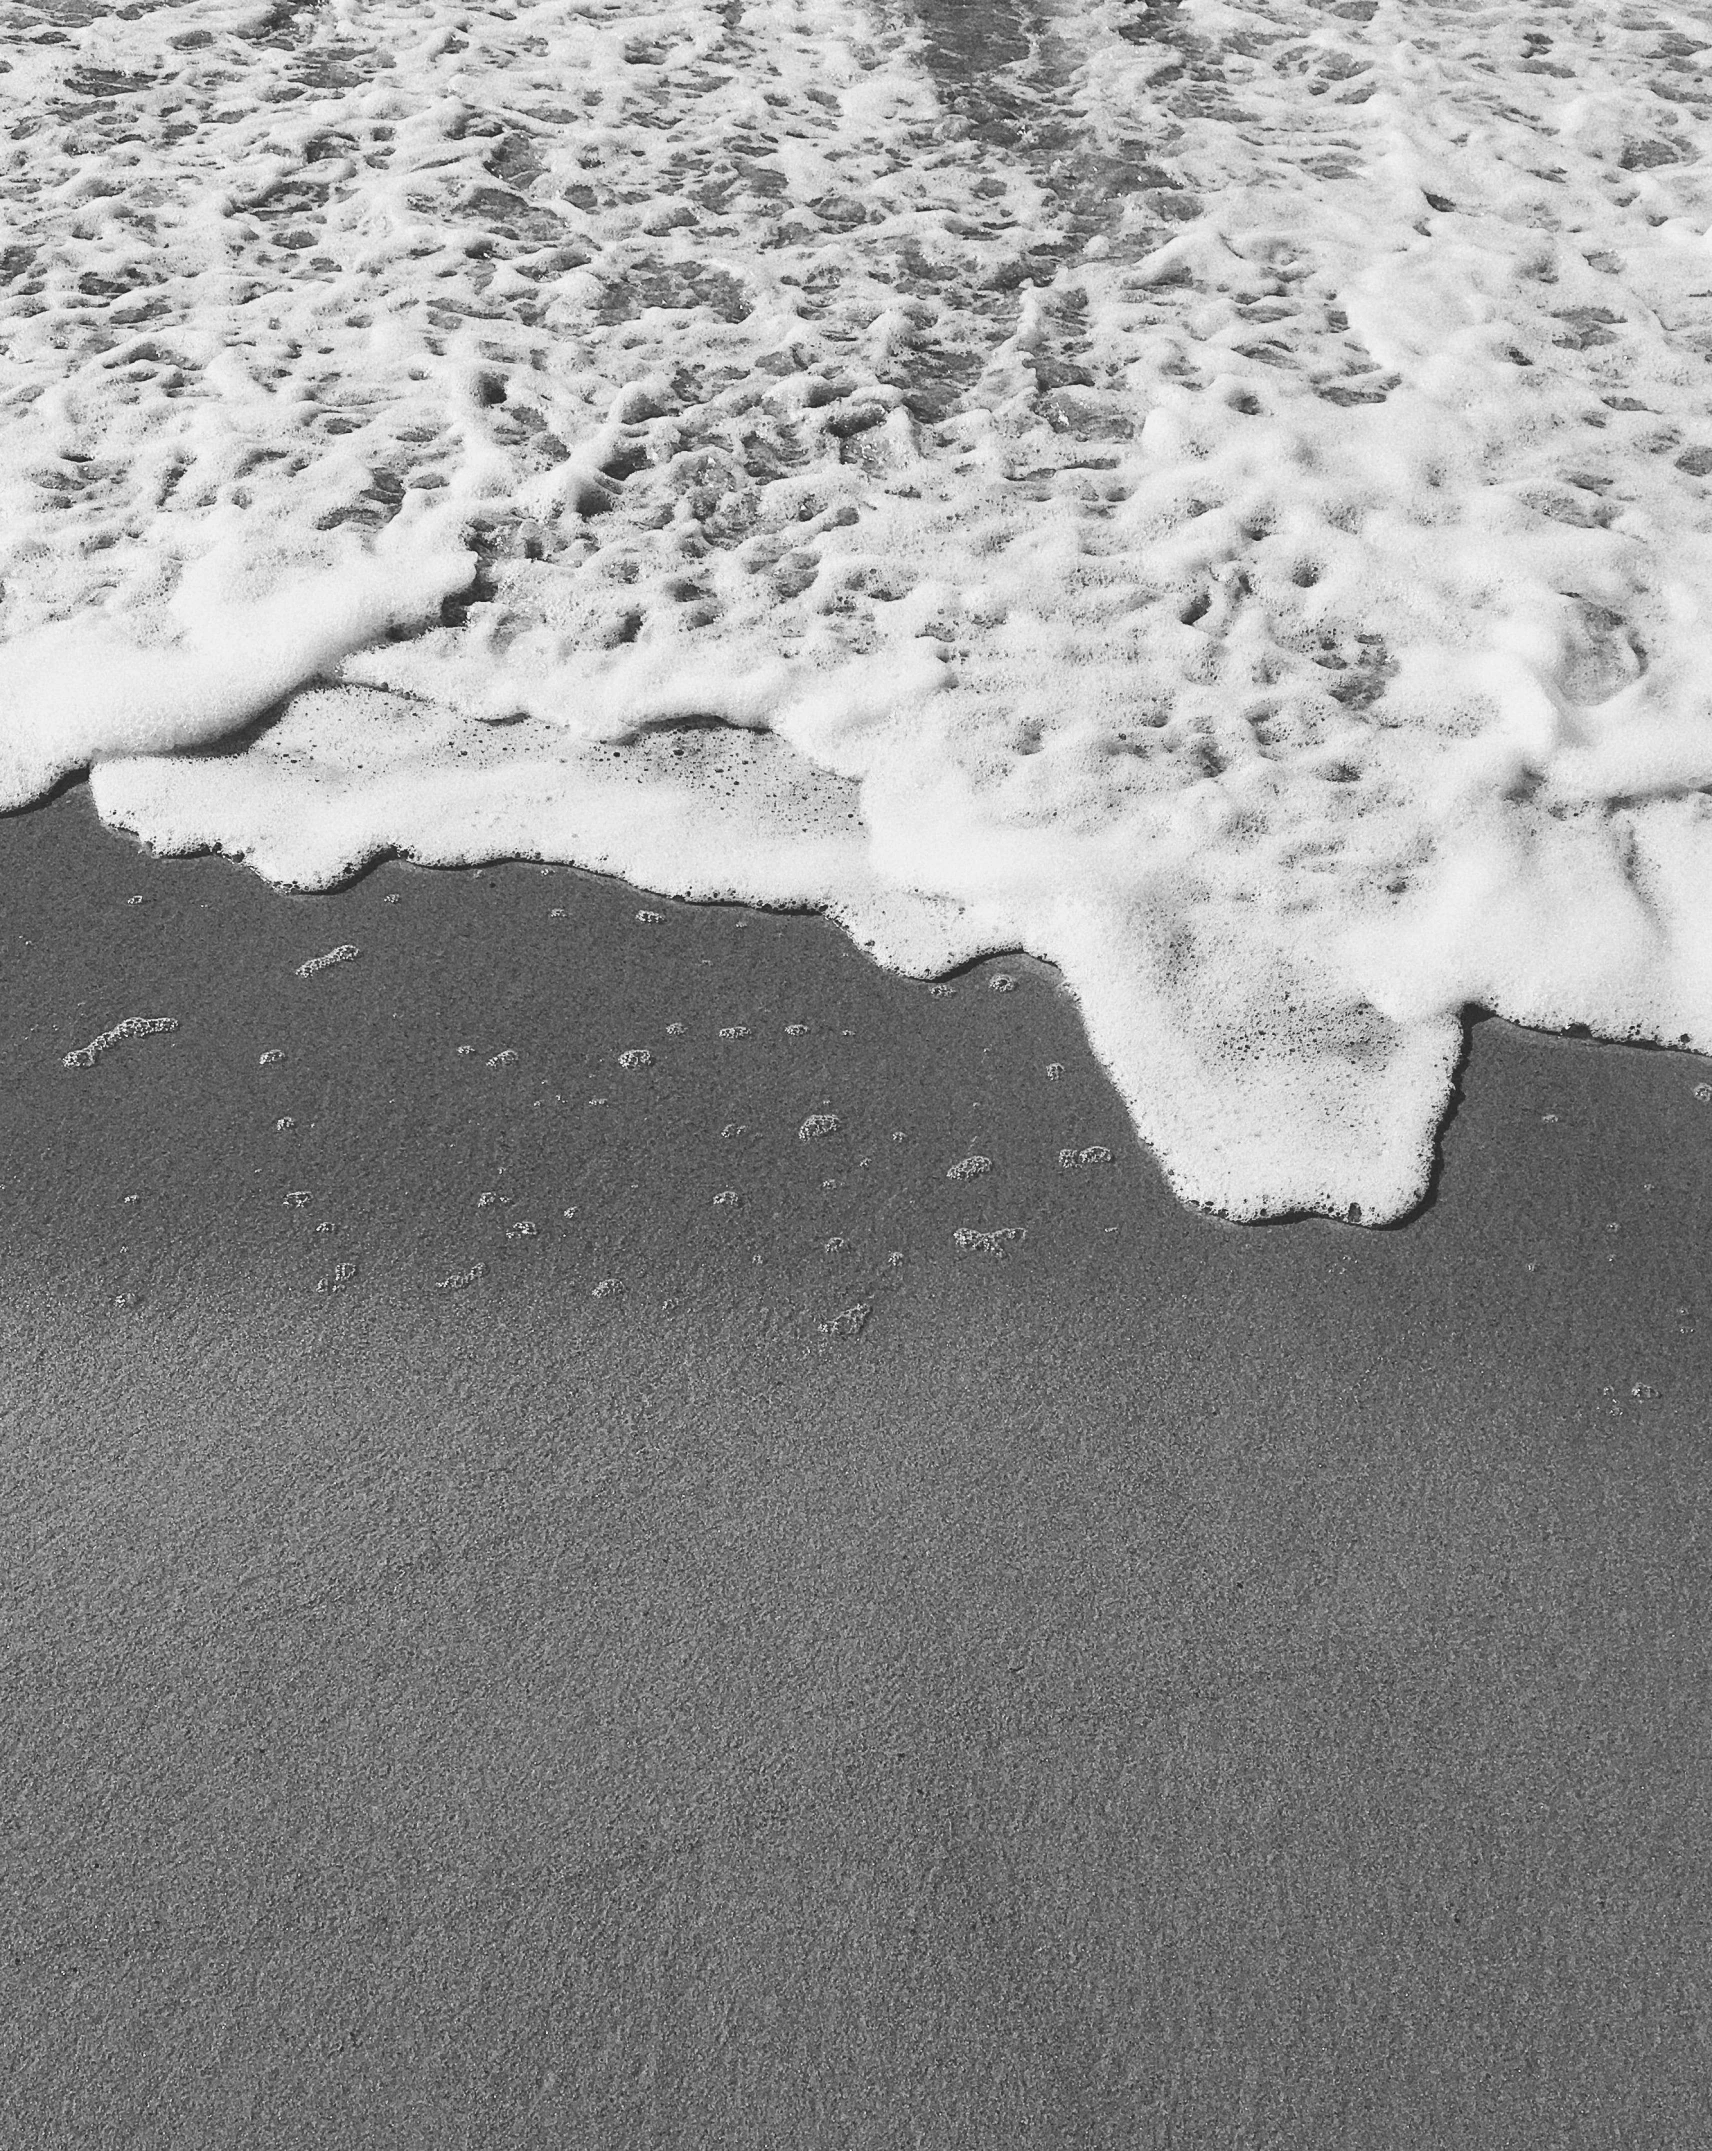 white foamy wave coming towards the shore of an ocean beach